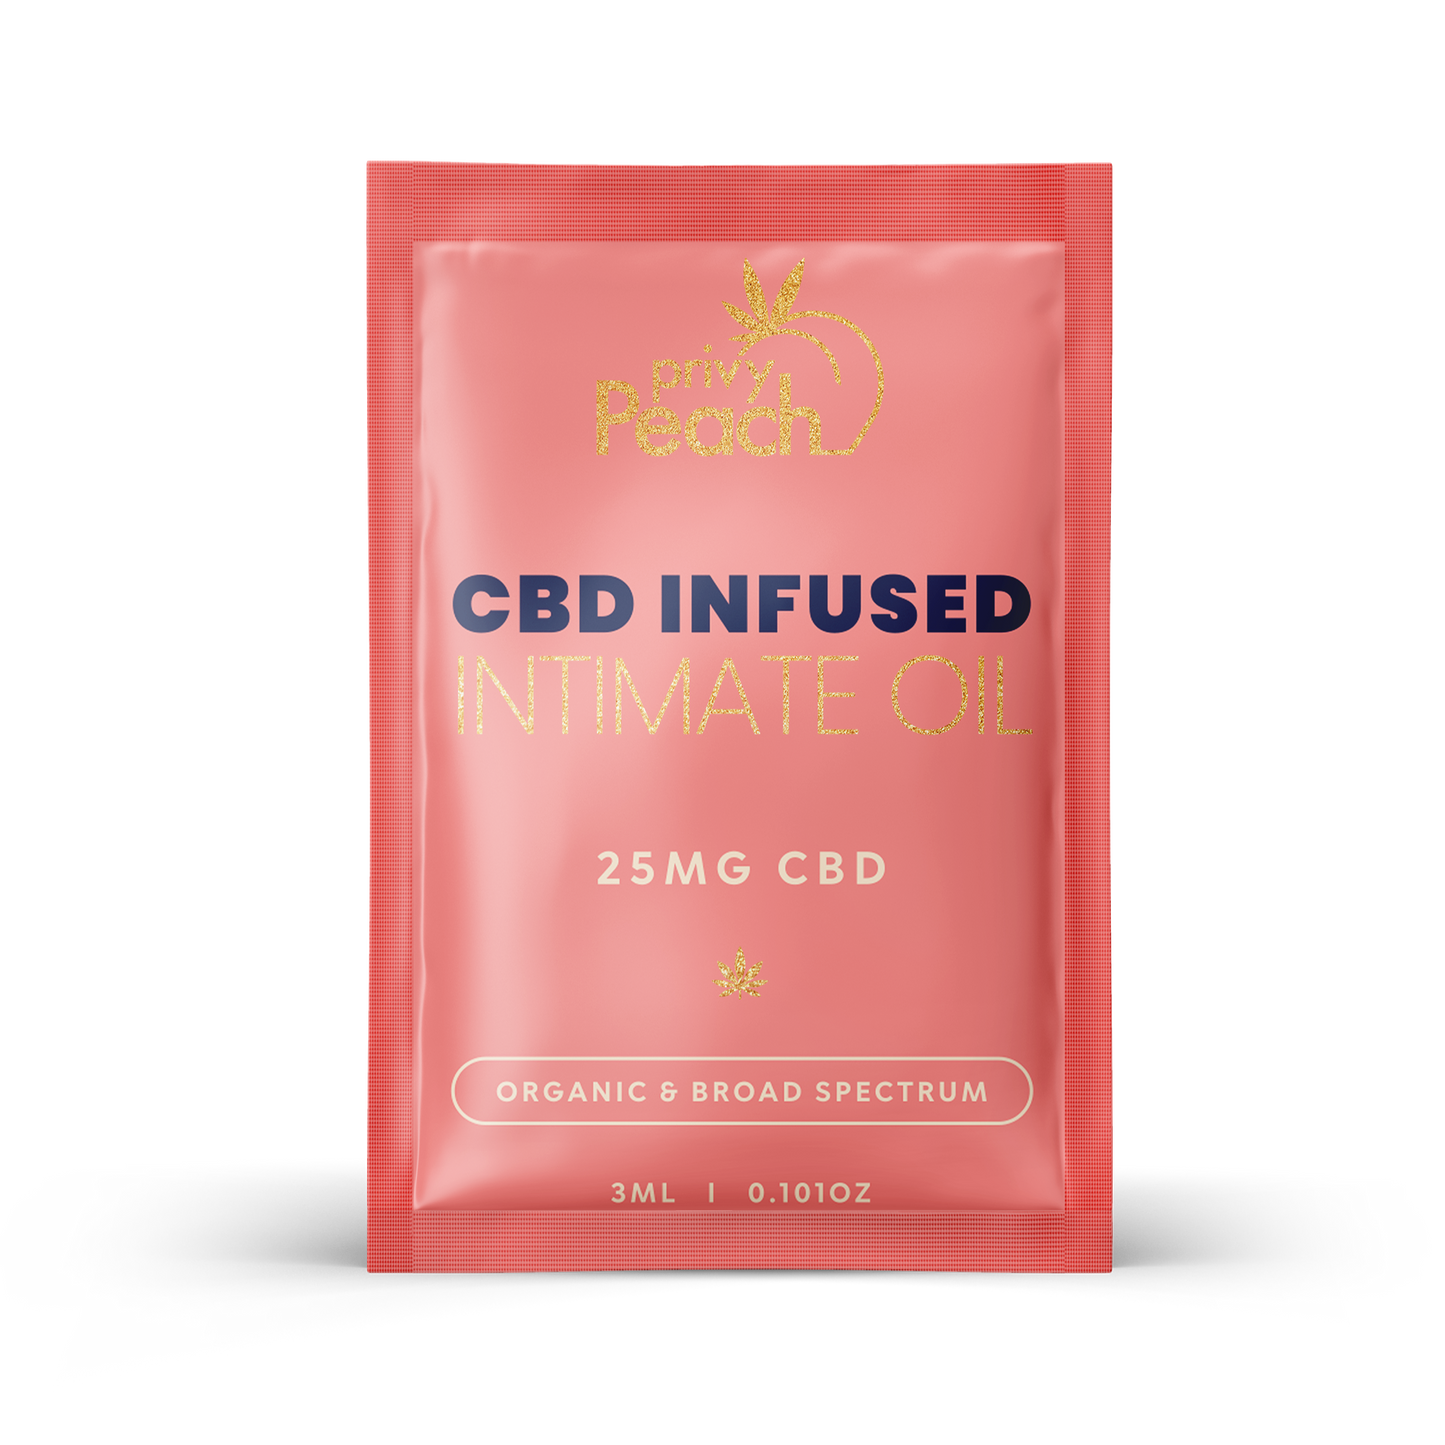 Bulk case of 10 CBD infused Intimate Oil by Privy Peach